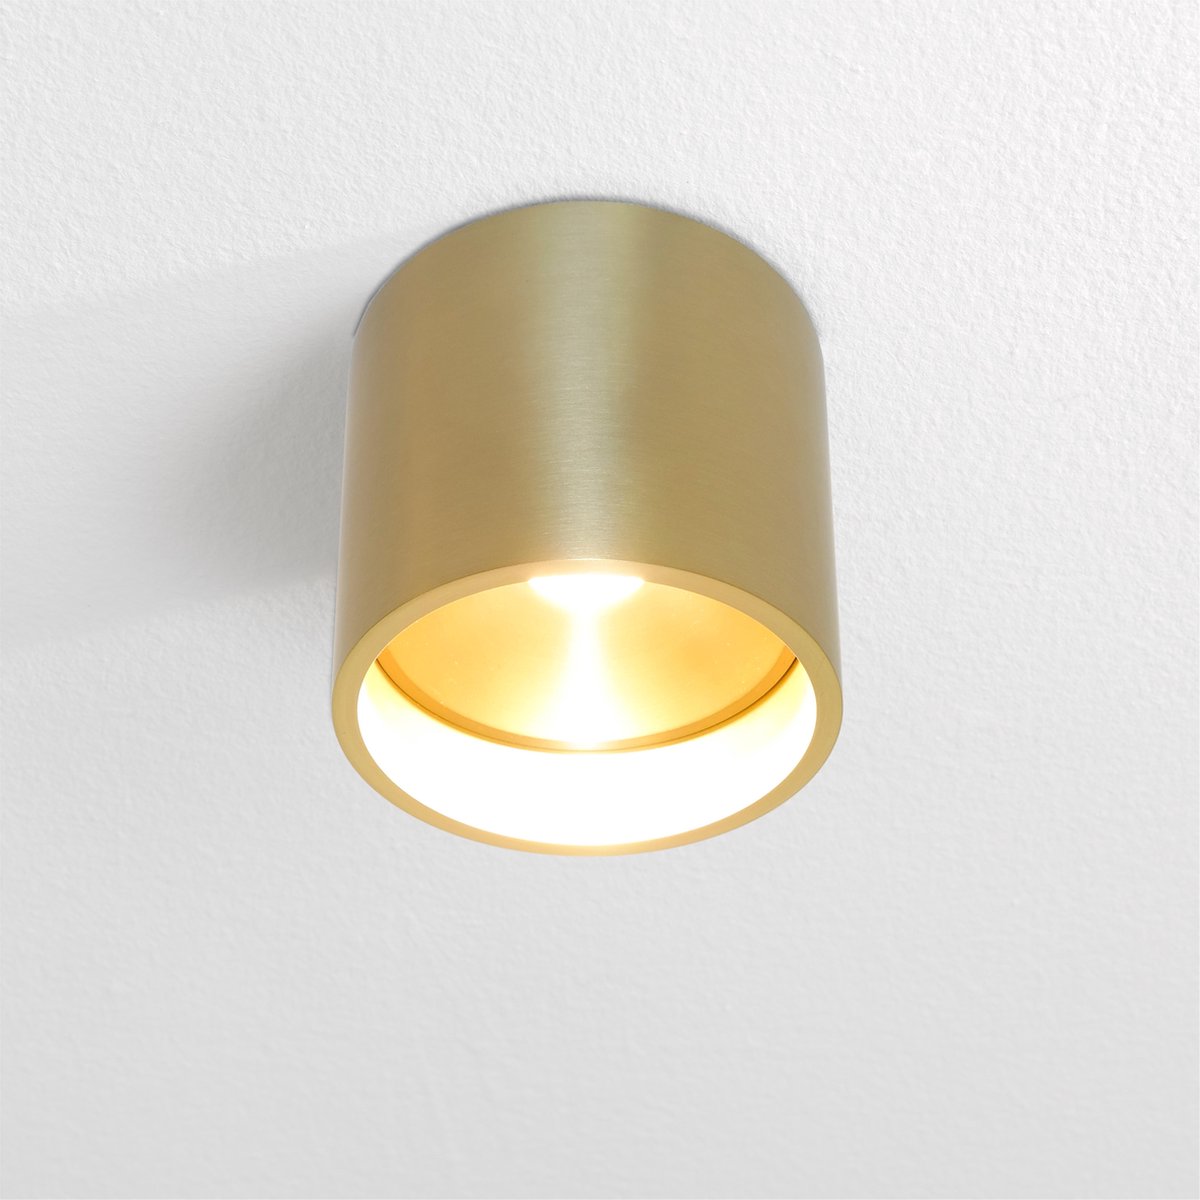 Plafondlamp Orleans Goud - Ø11cm - LED 7W 2700K 805lm - IP20 - Dimbaar > spots verlichting led goud | opbouwspot led goud | plafonniere led goud | plafondlamp goud | led lamp goud | sfeer lamp goud | design lamp goud